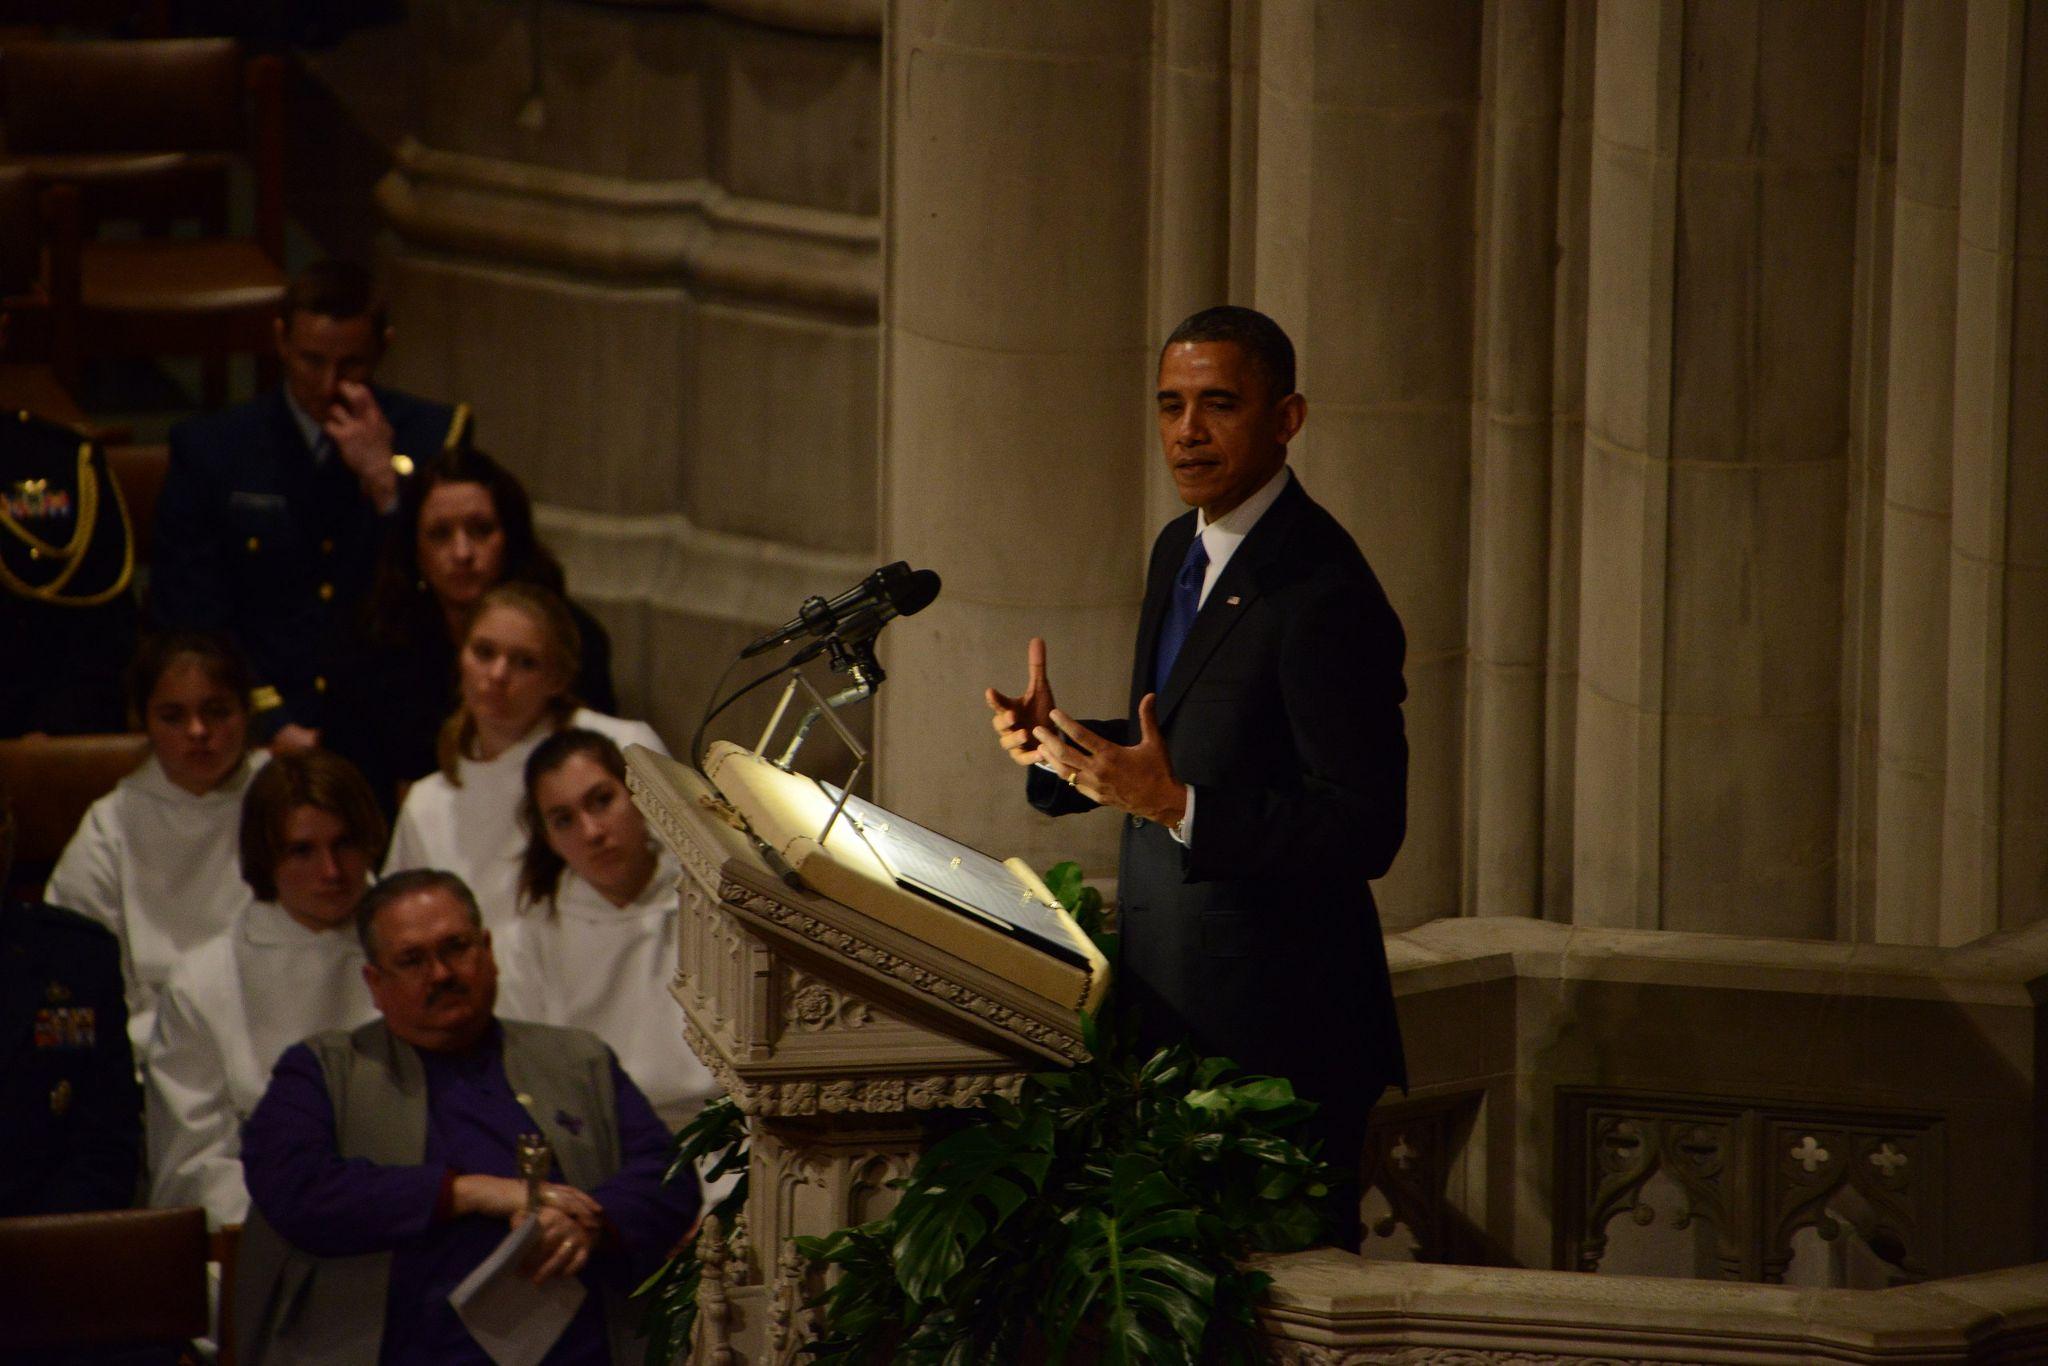 President Obama giving a eulogy for U.S. senator Daniel Inouye at the Washington National Cathedral on December 21, 2012.